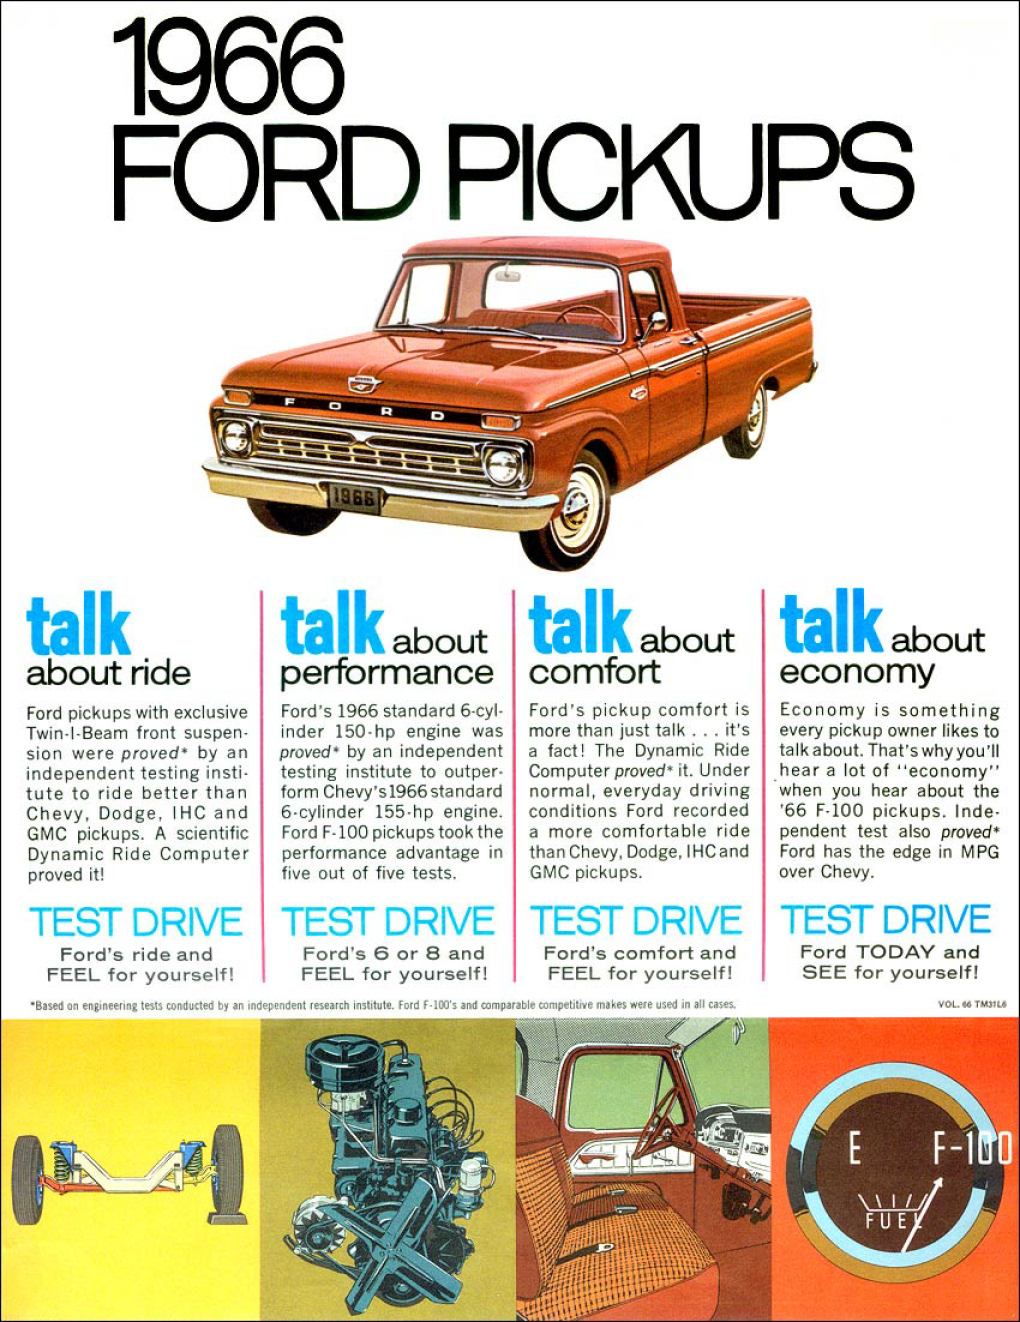 n_1966 Ford Pickup Mailer-02.jpg